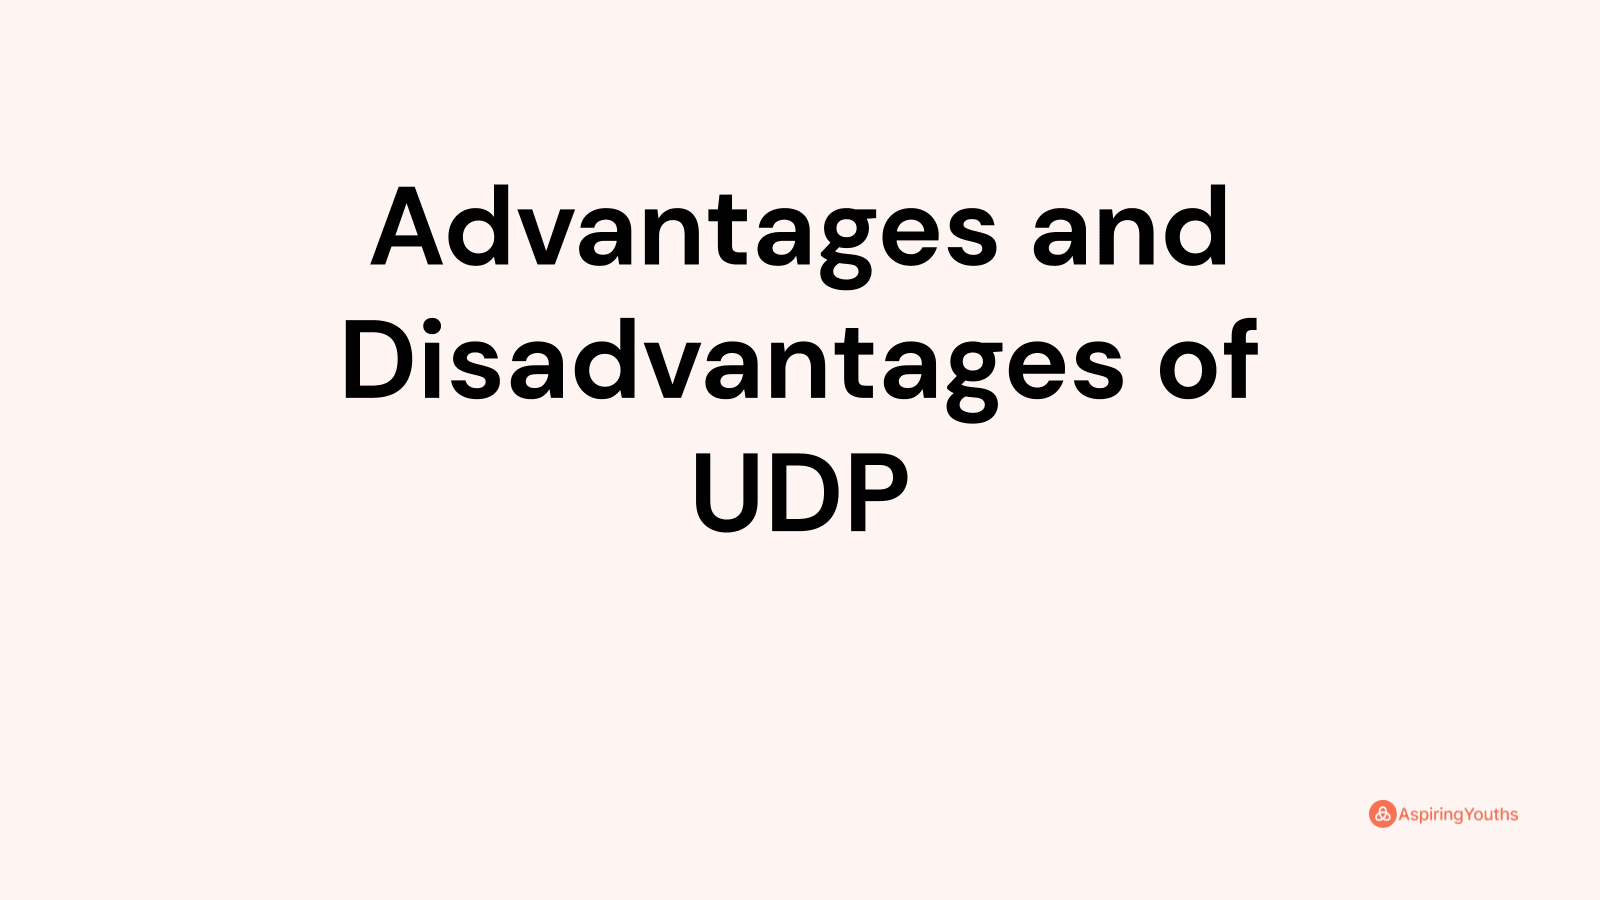 Advantages and disadvantages of UDP